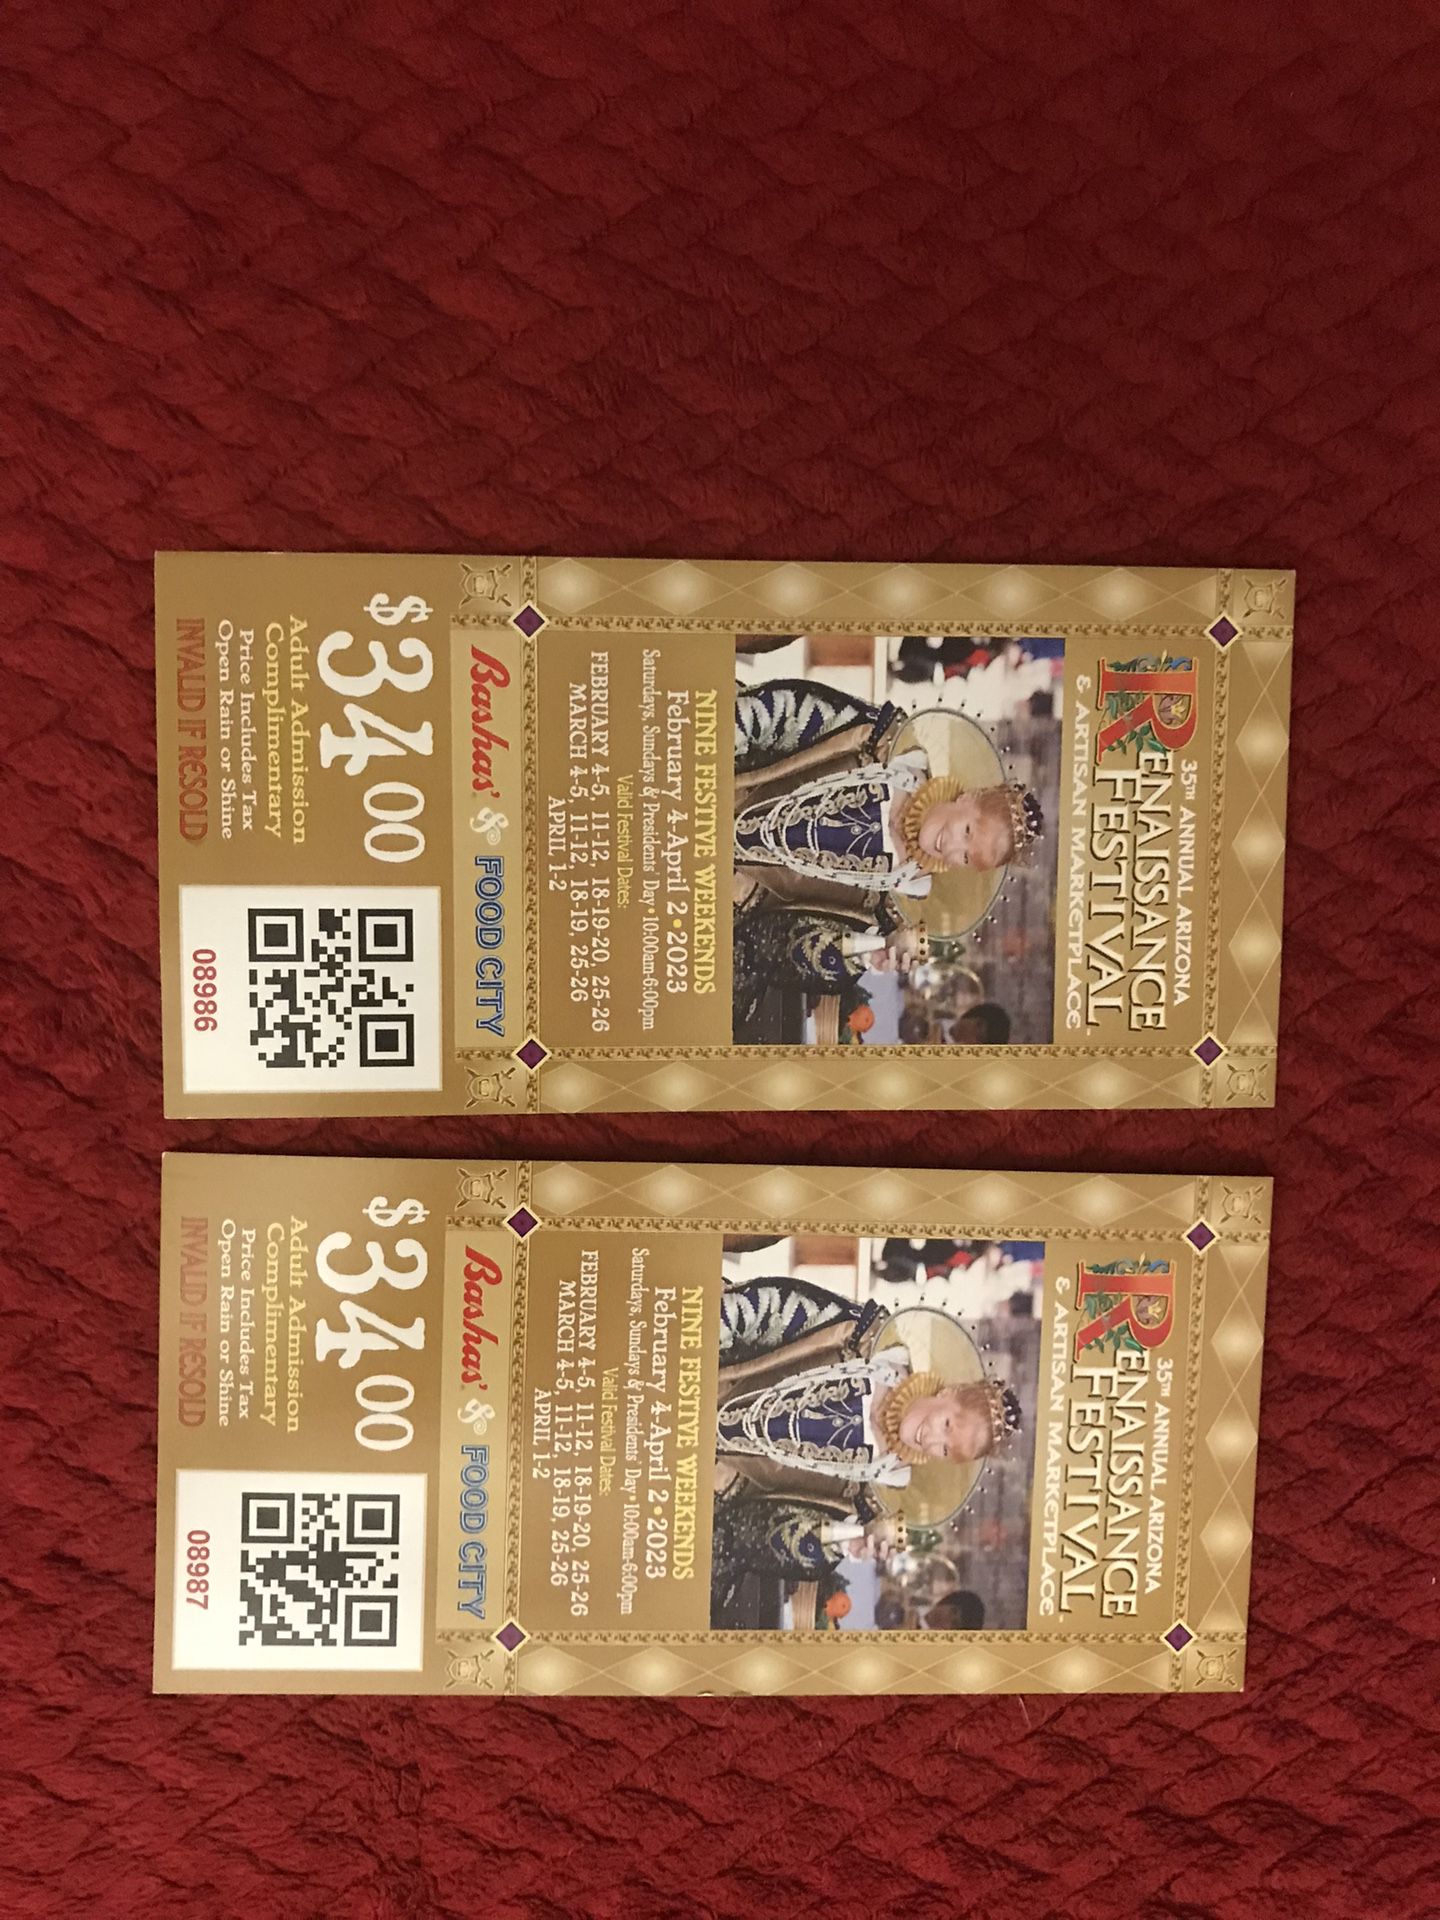 Renaissance Festival Tickets